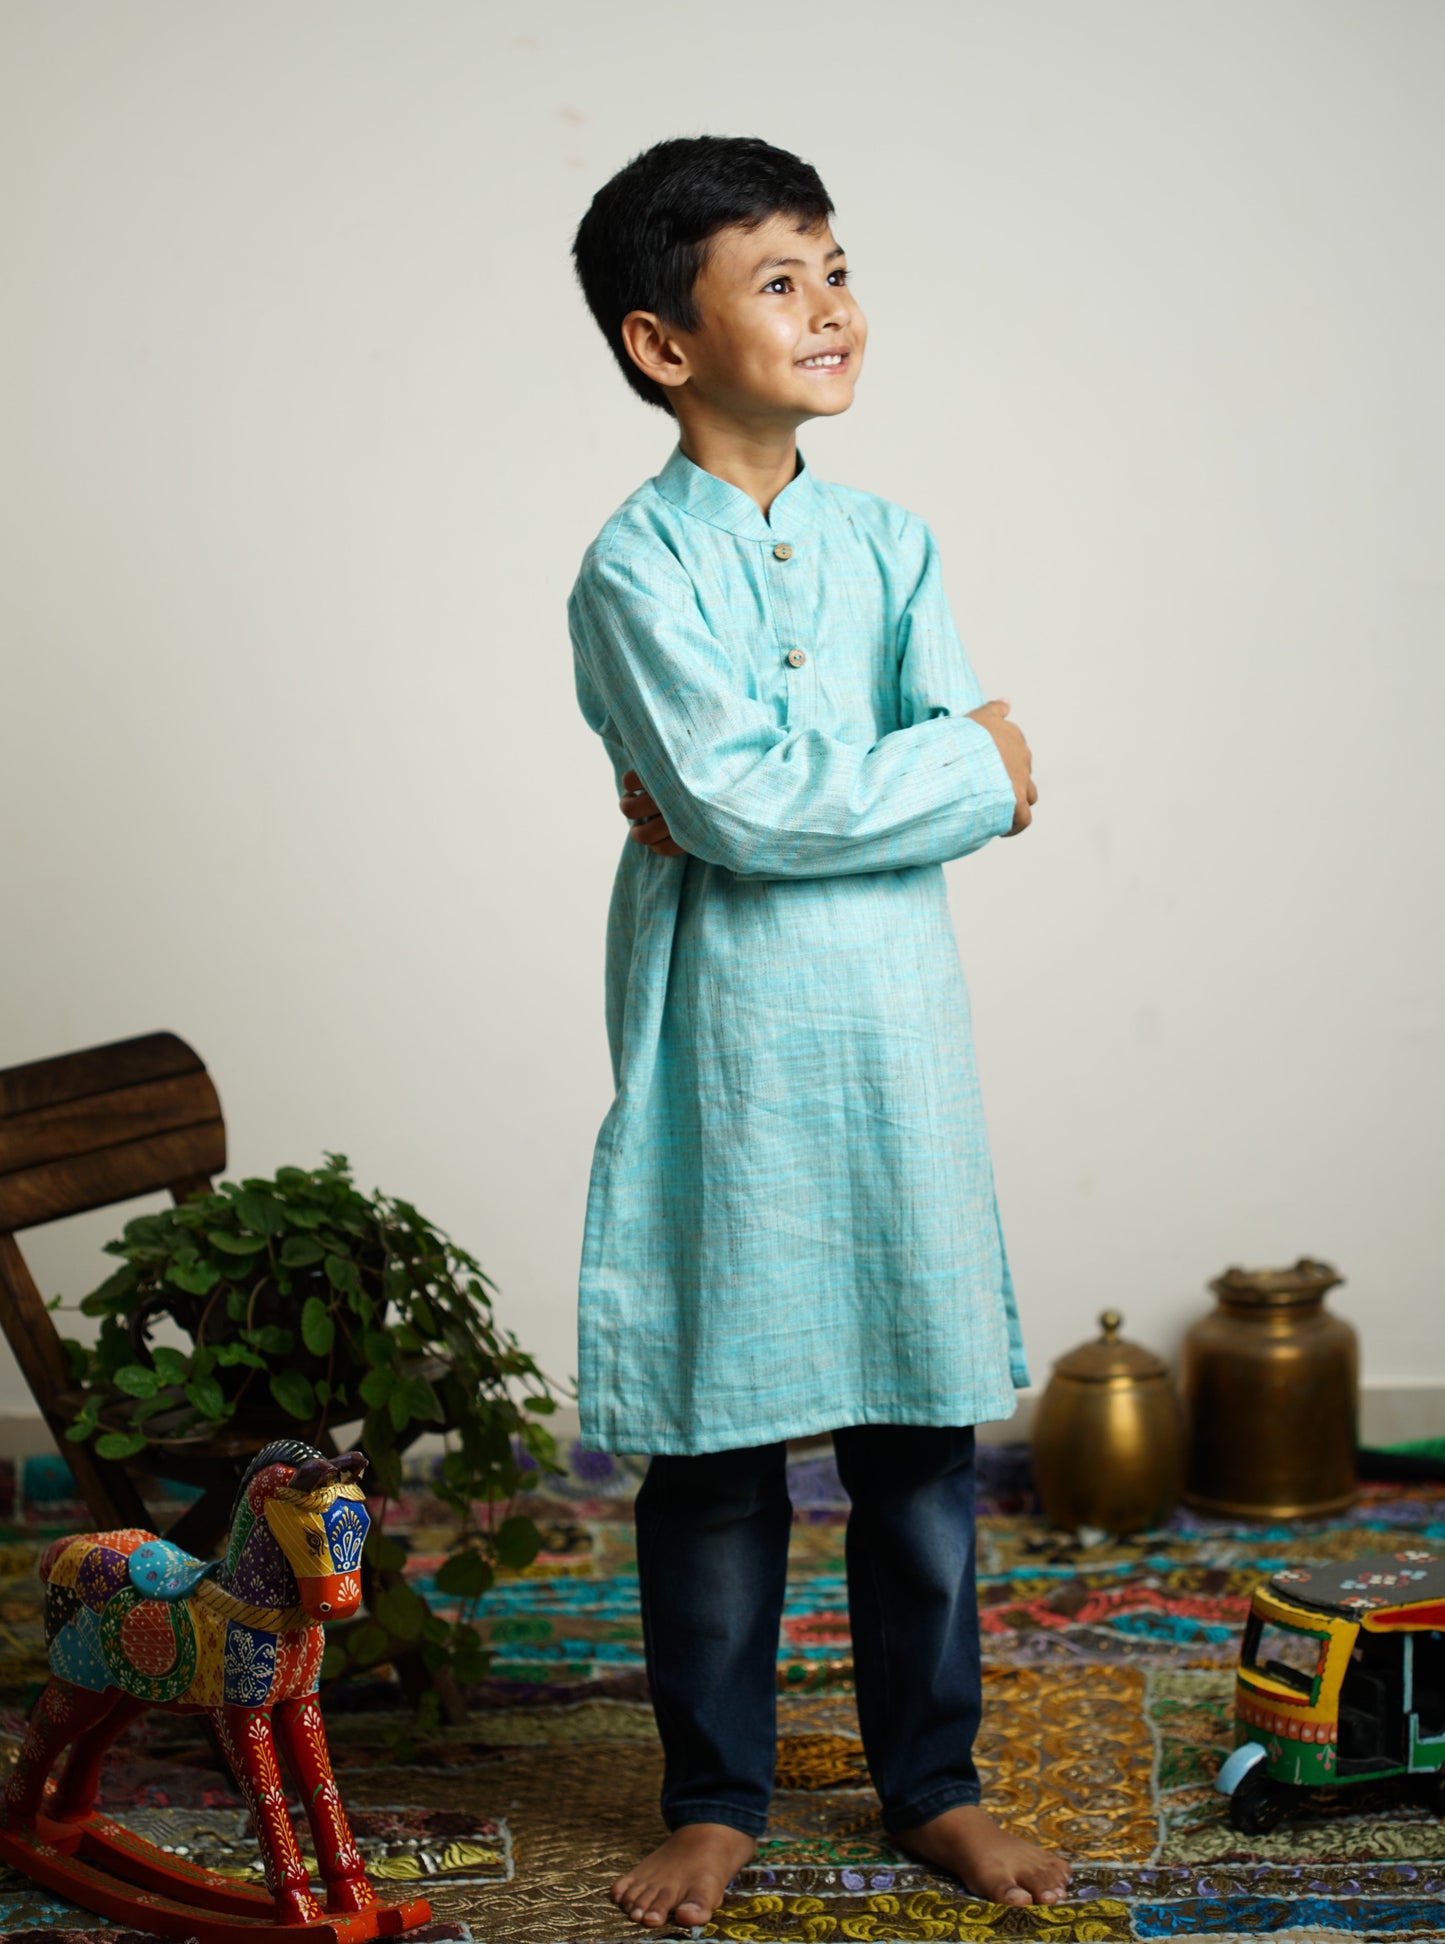 Sky Blue silk traditional ethnic brocade printed silk cotton kurta pyjama salwar suit pajama churidar set sherwani jacket for baby boy kids 